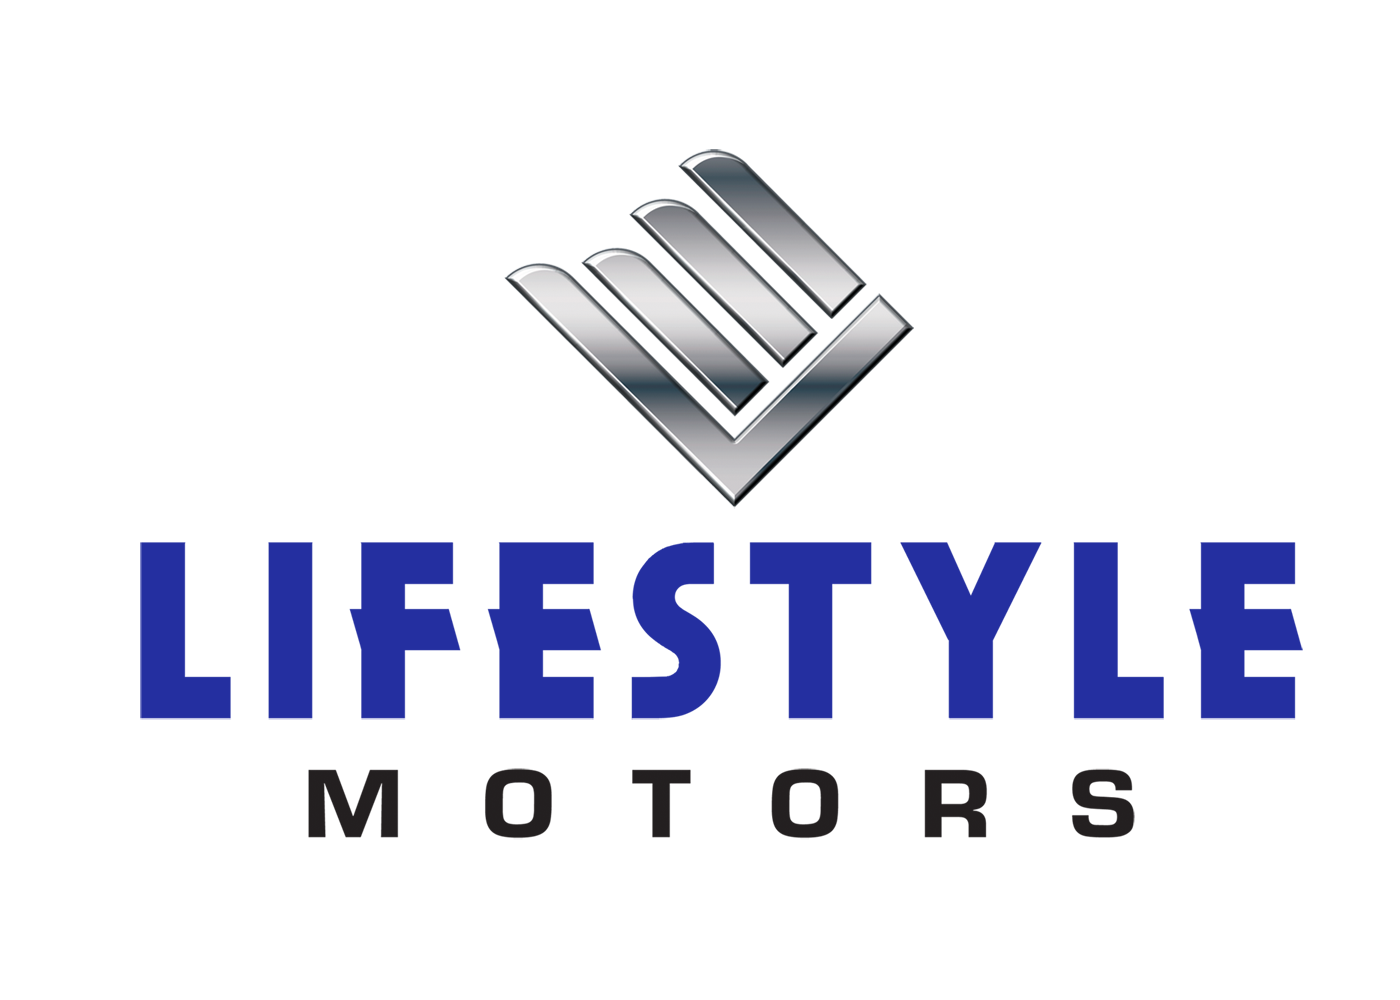 Lifestyle Motors